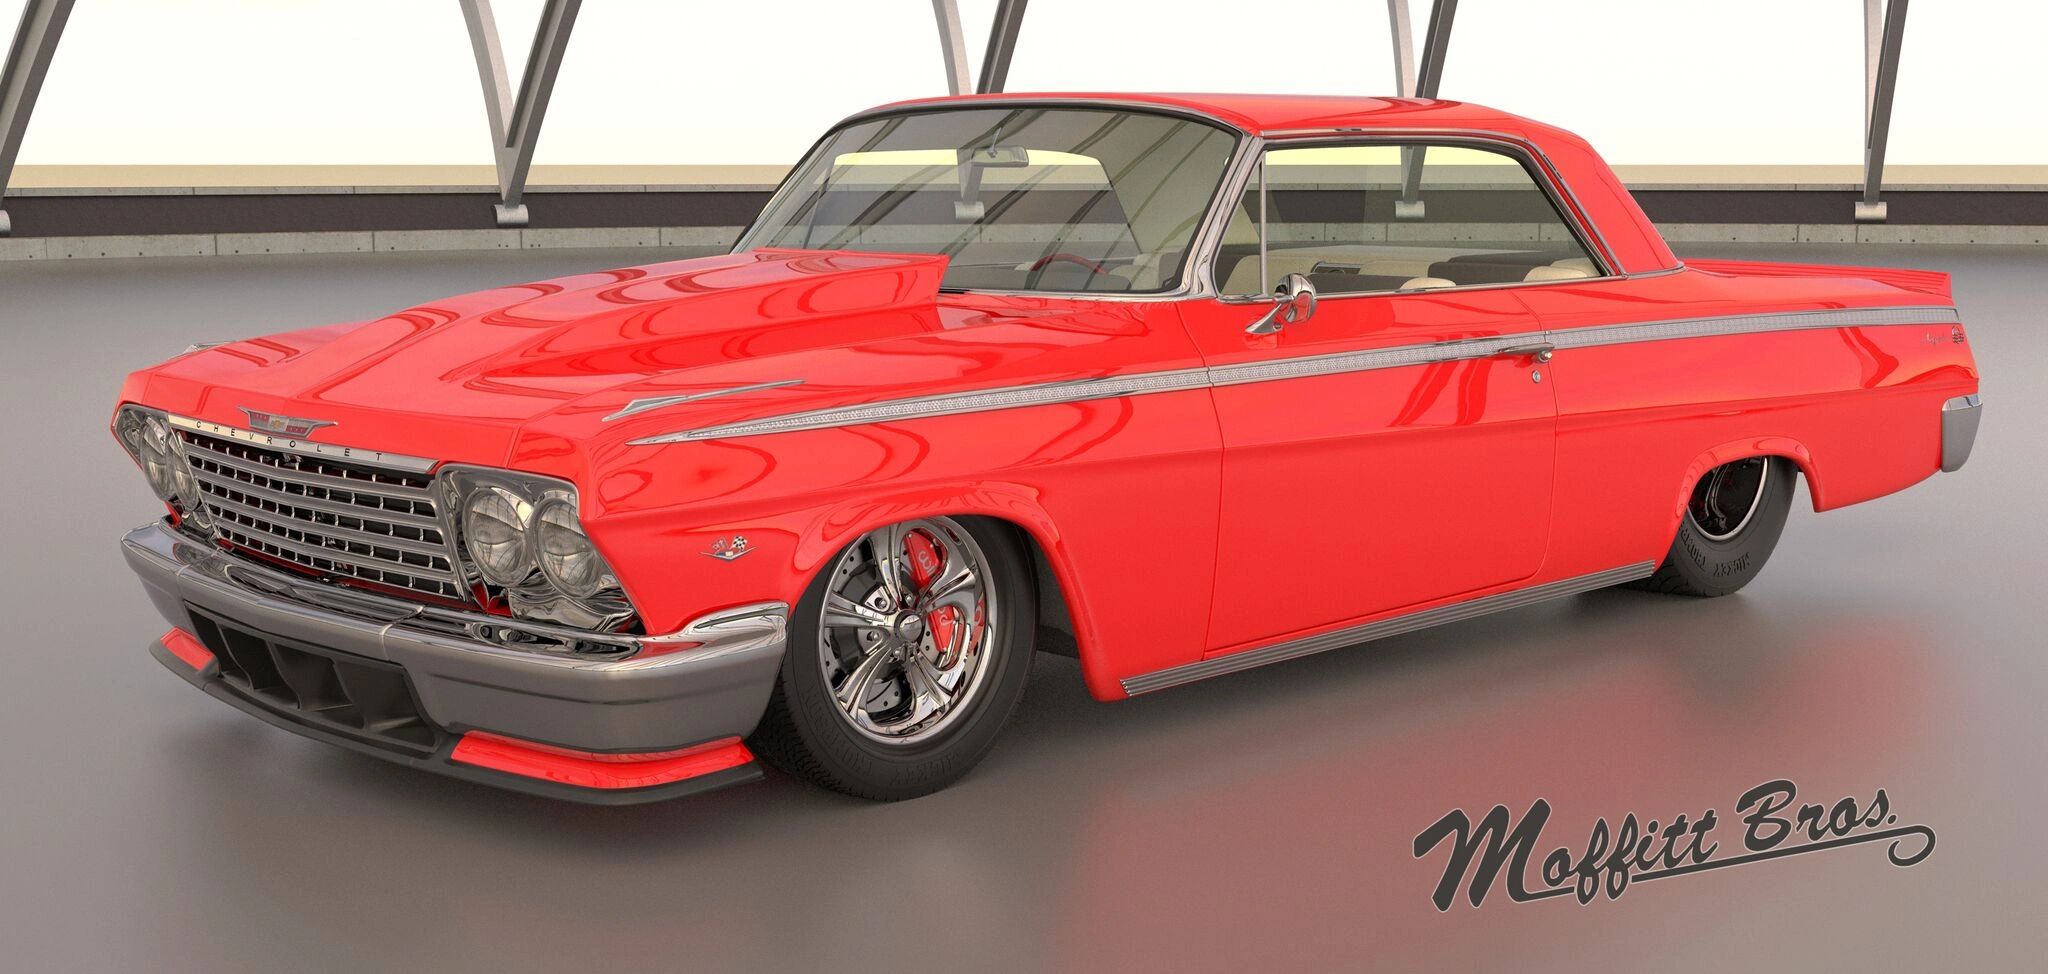 Custom Prostreet 1962 Impala featuring the Rat Tail Wheels, TMI Interior, full custom treatment.